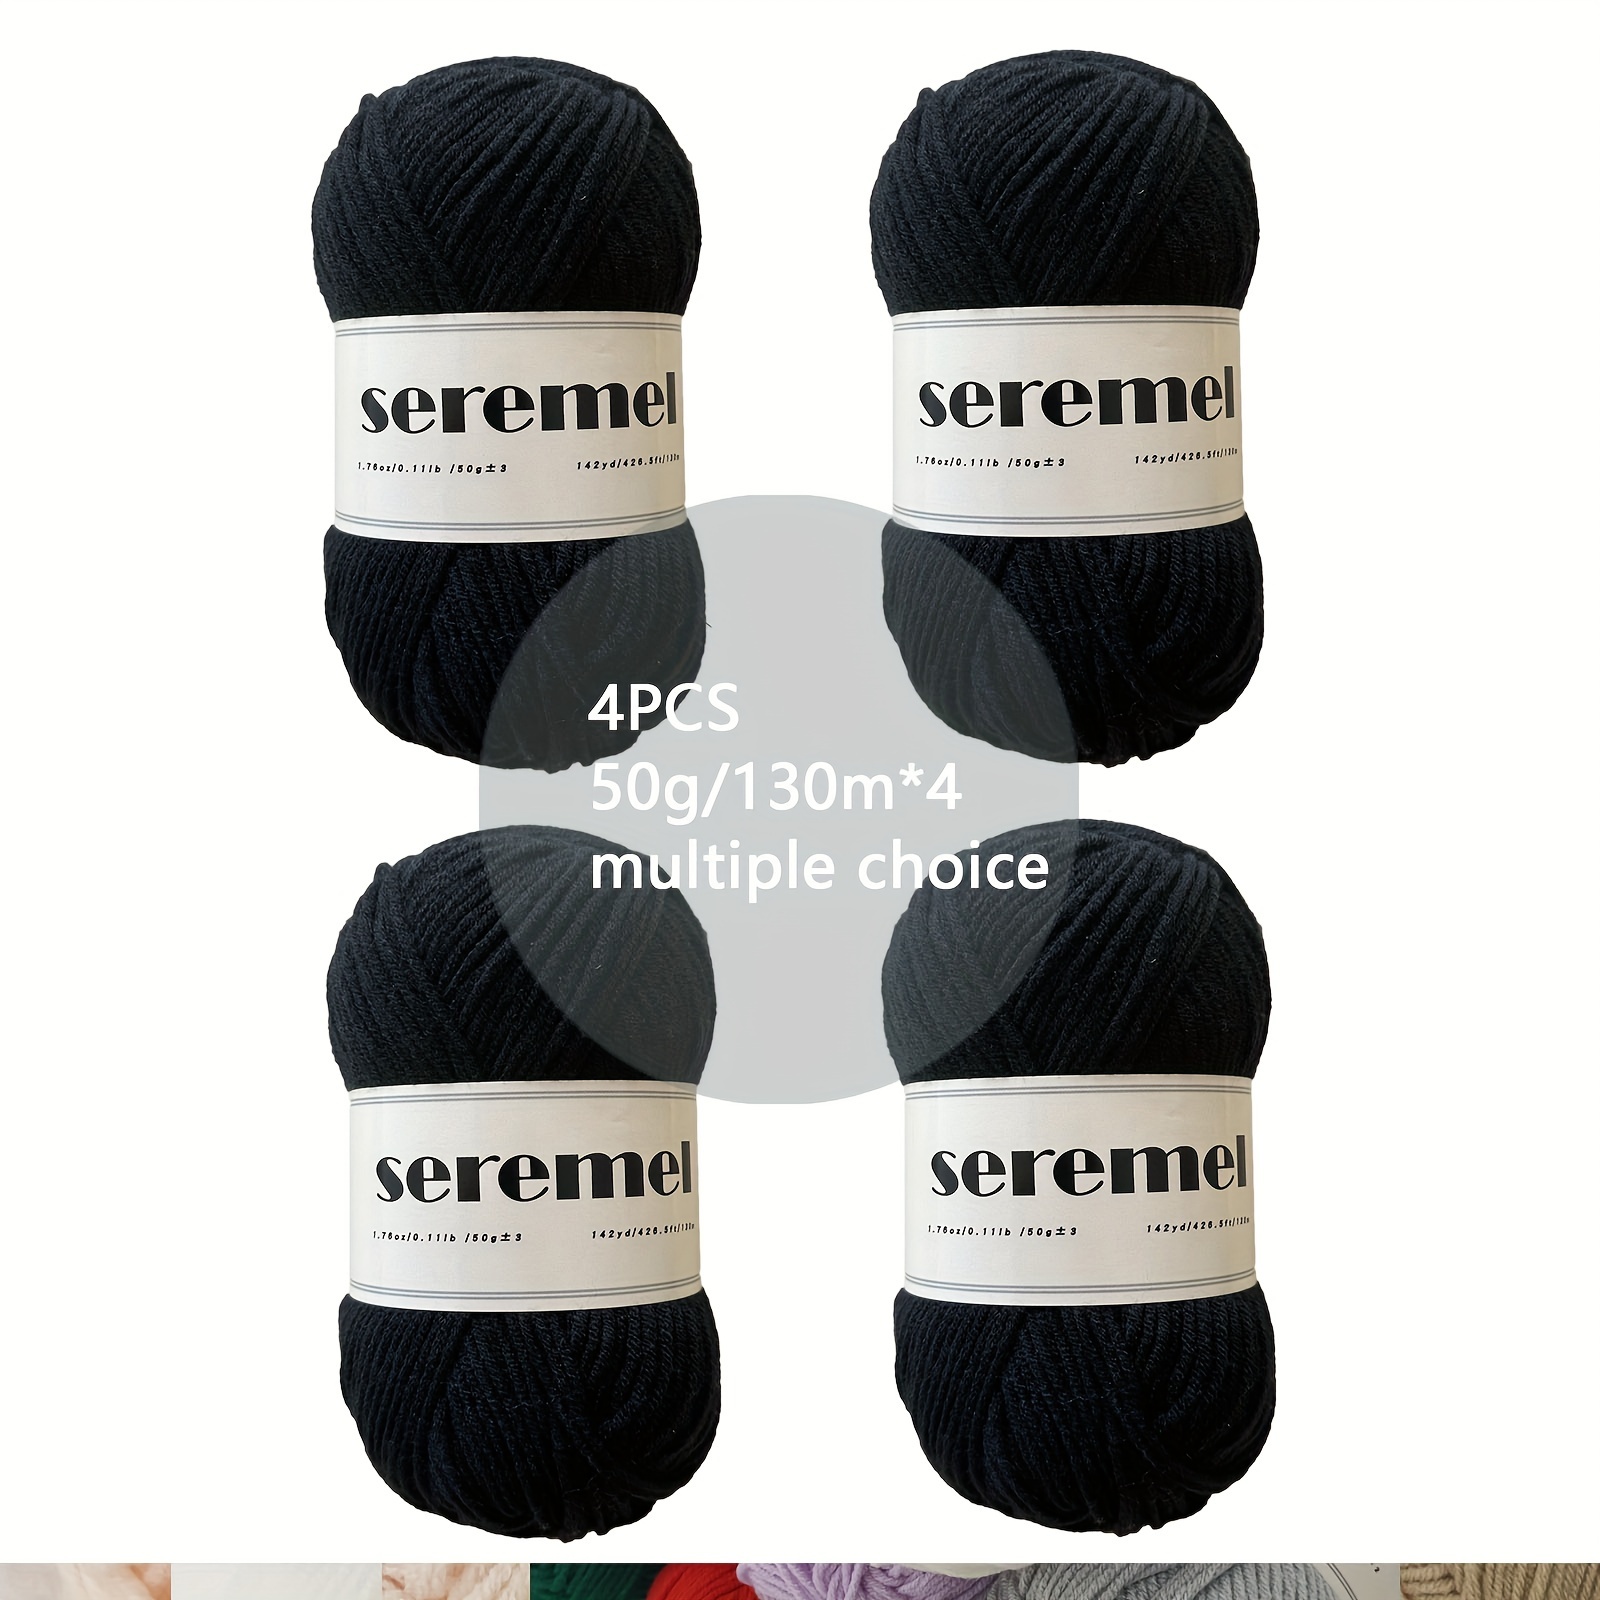 Soft Crochet & Knitting Polyester Yarn – Homecraft Textiles